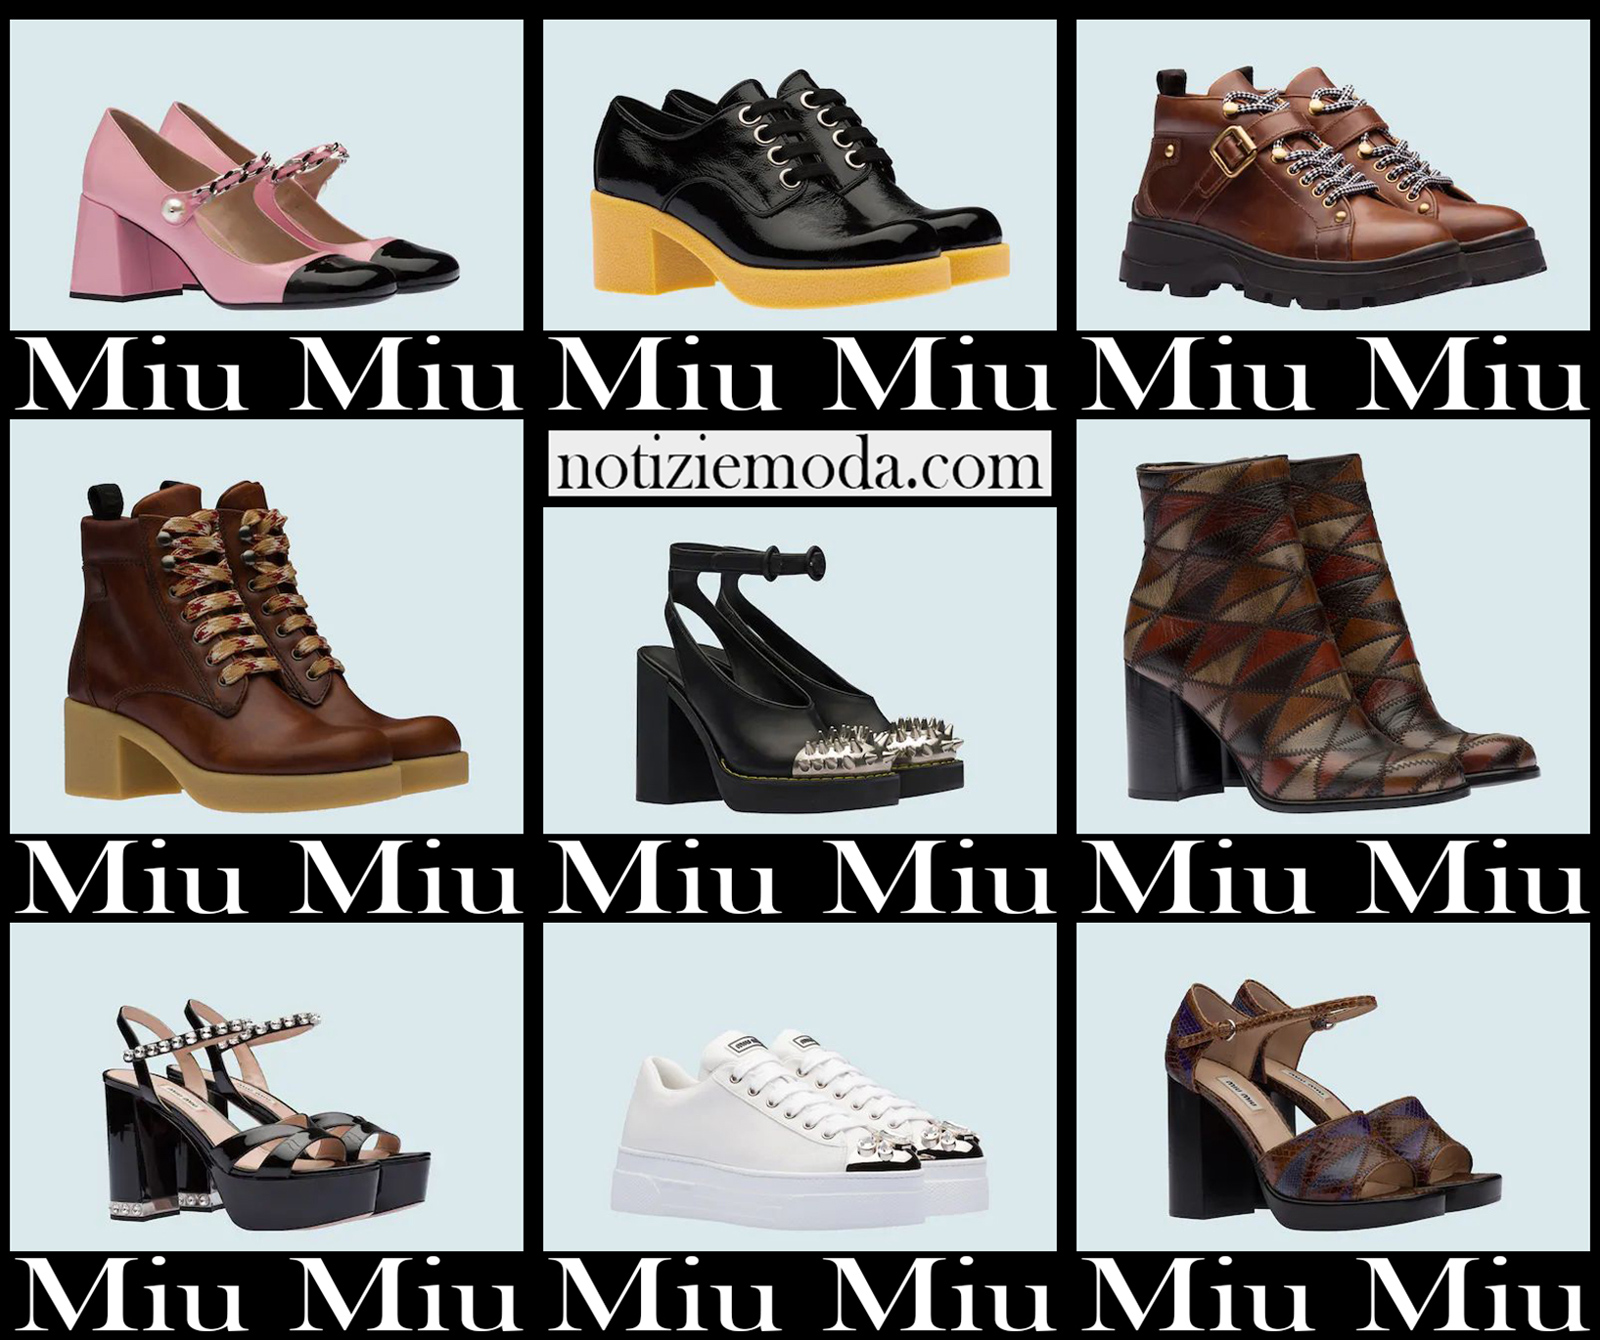 Nuovi arrivi scarpe Miu Miu 2021 calzature moda donna